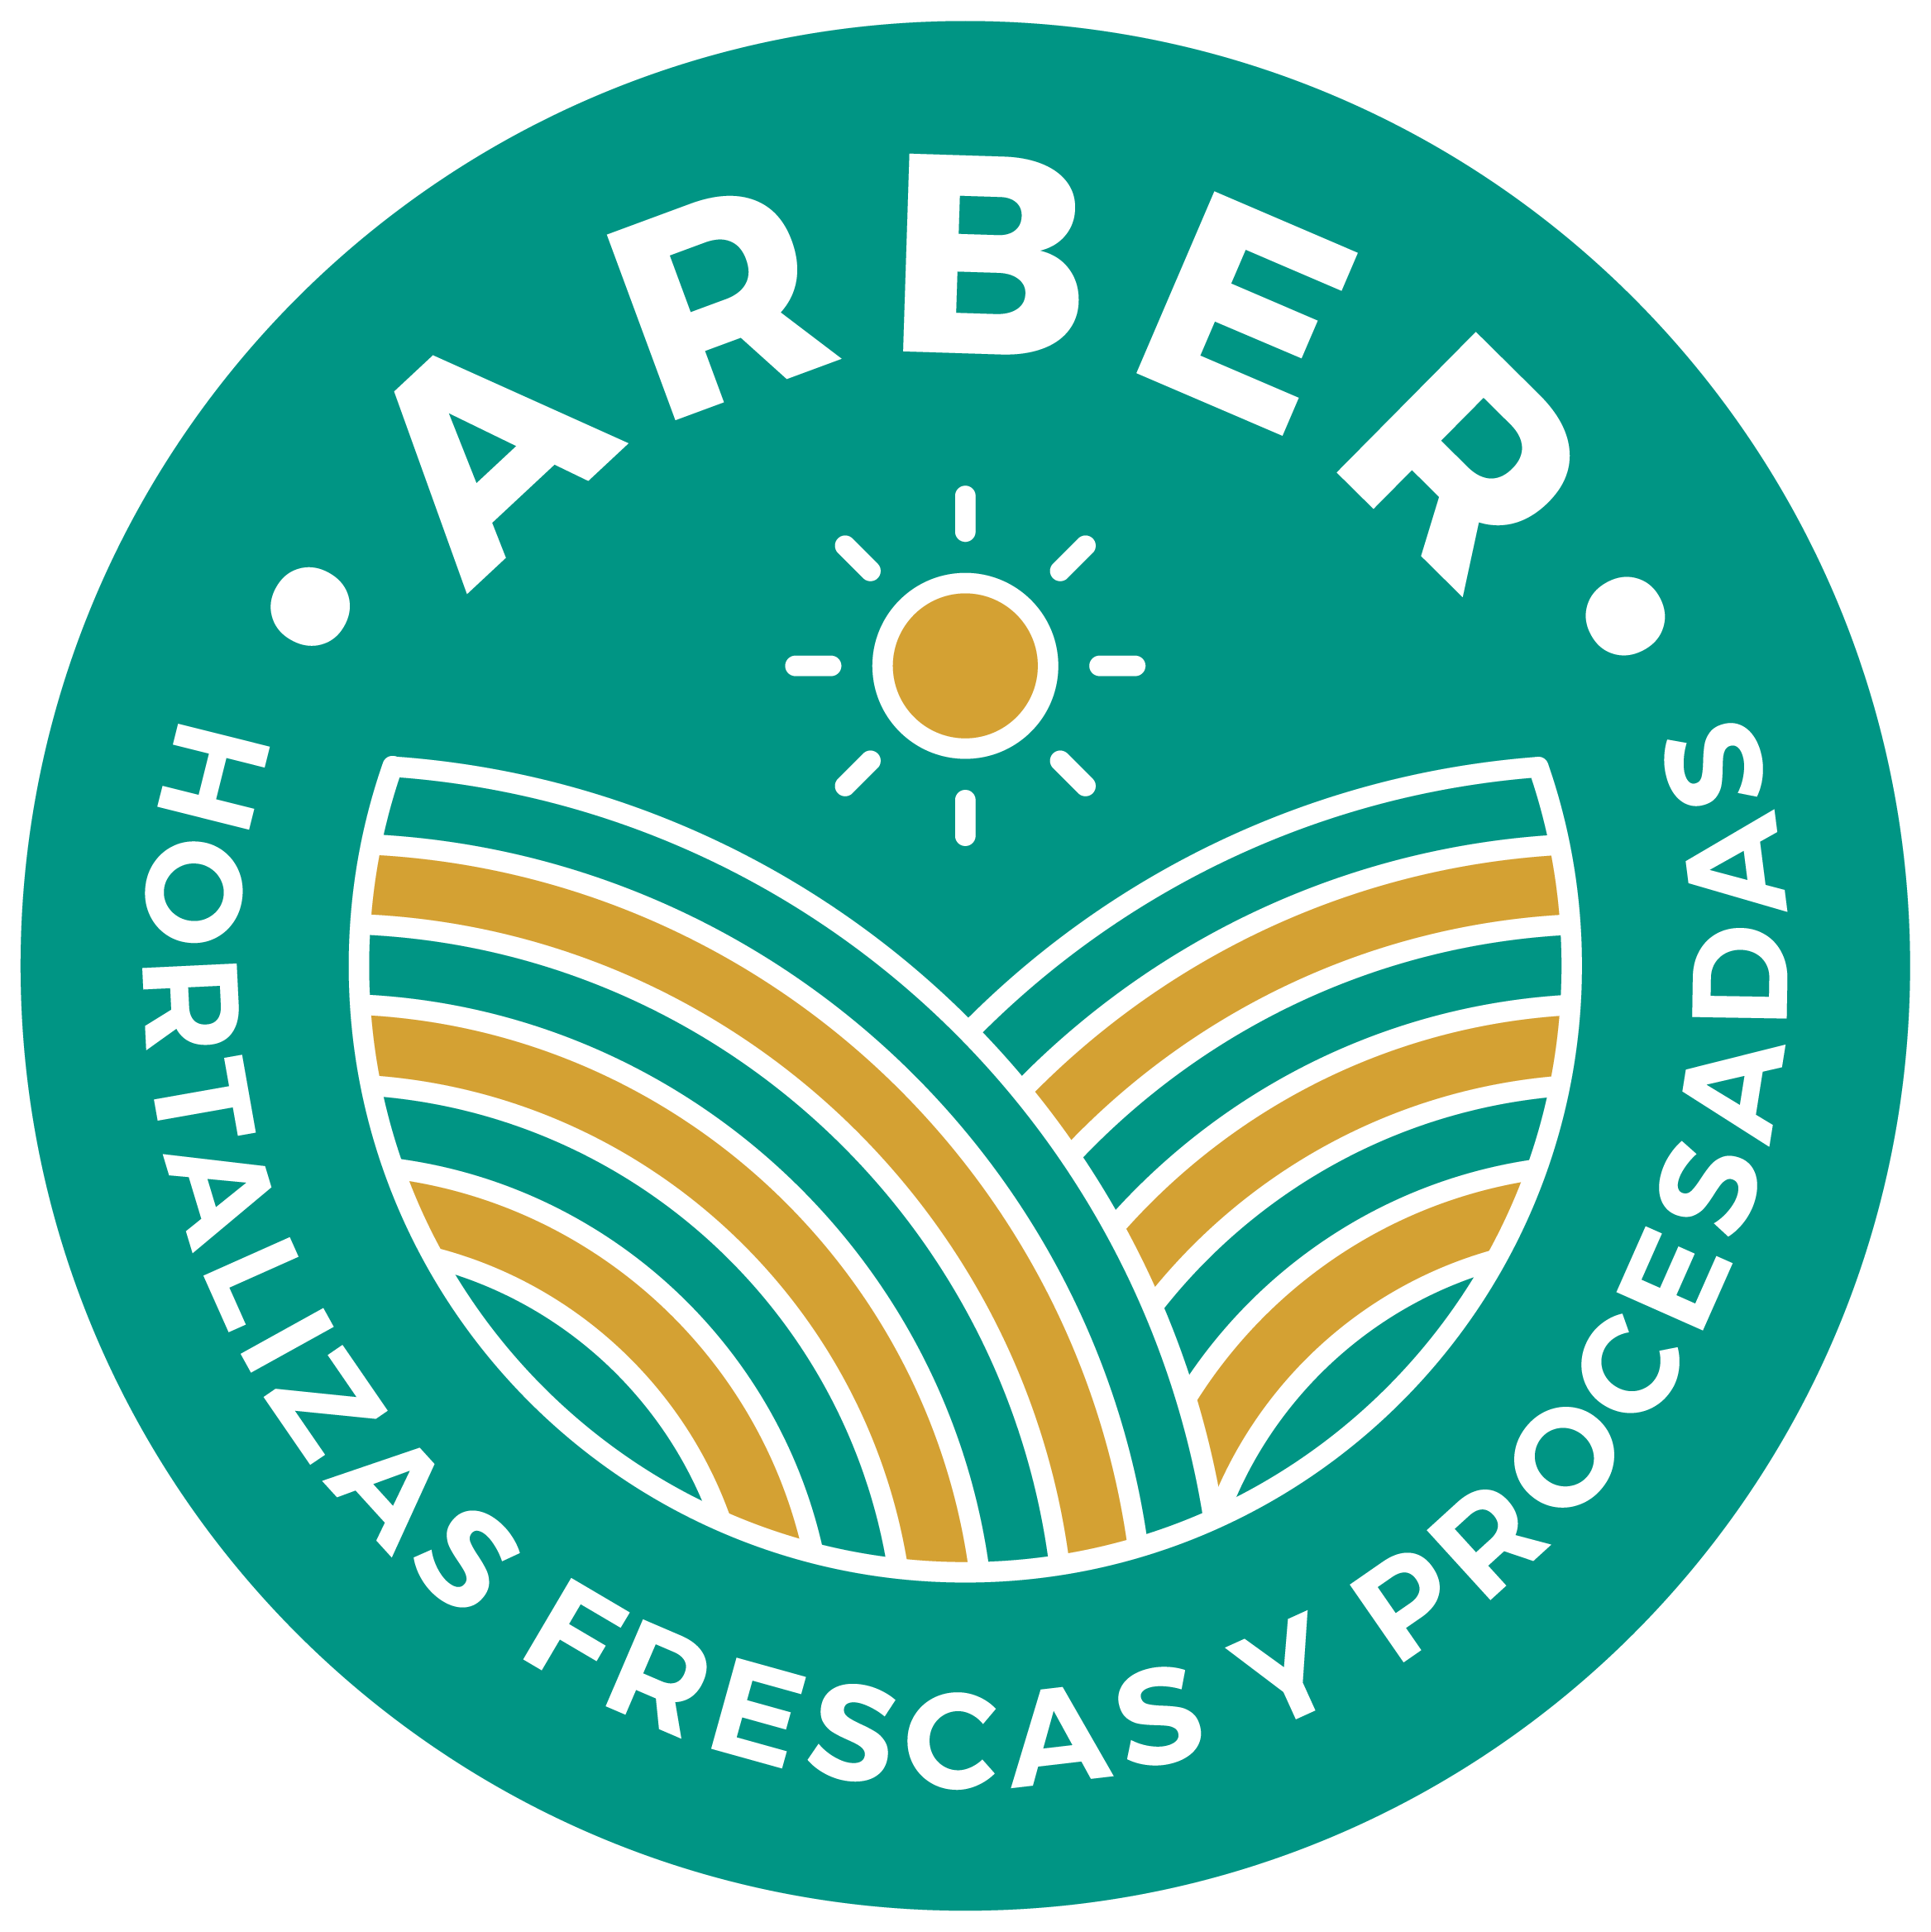 Logo Arber